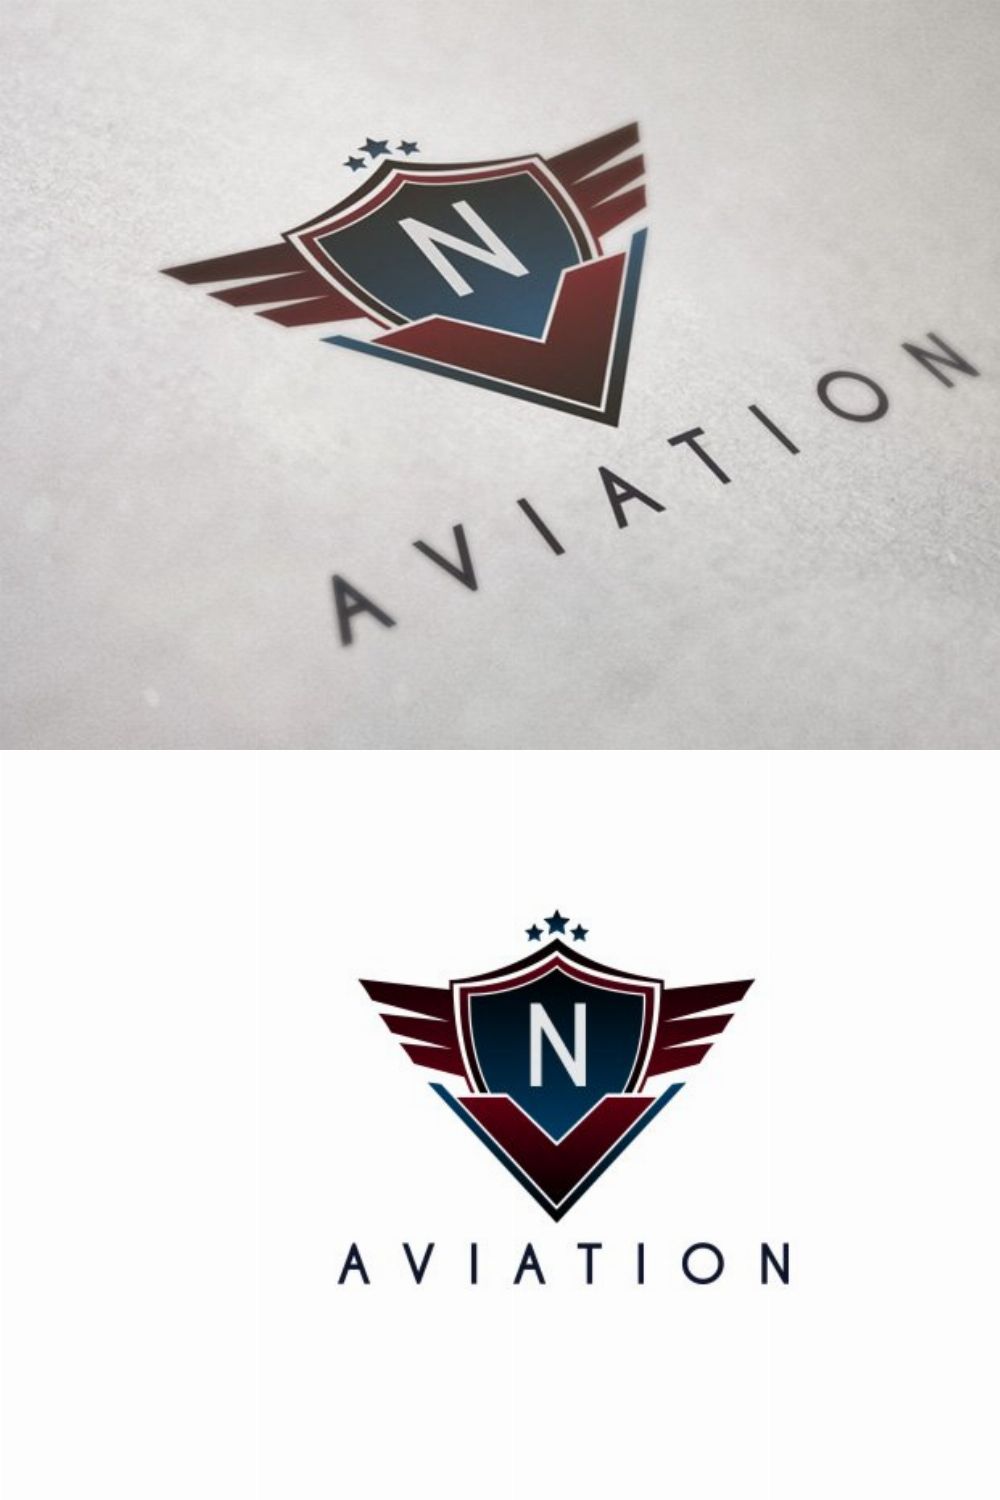 Aviation Badge Logo pinterest preview image.